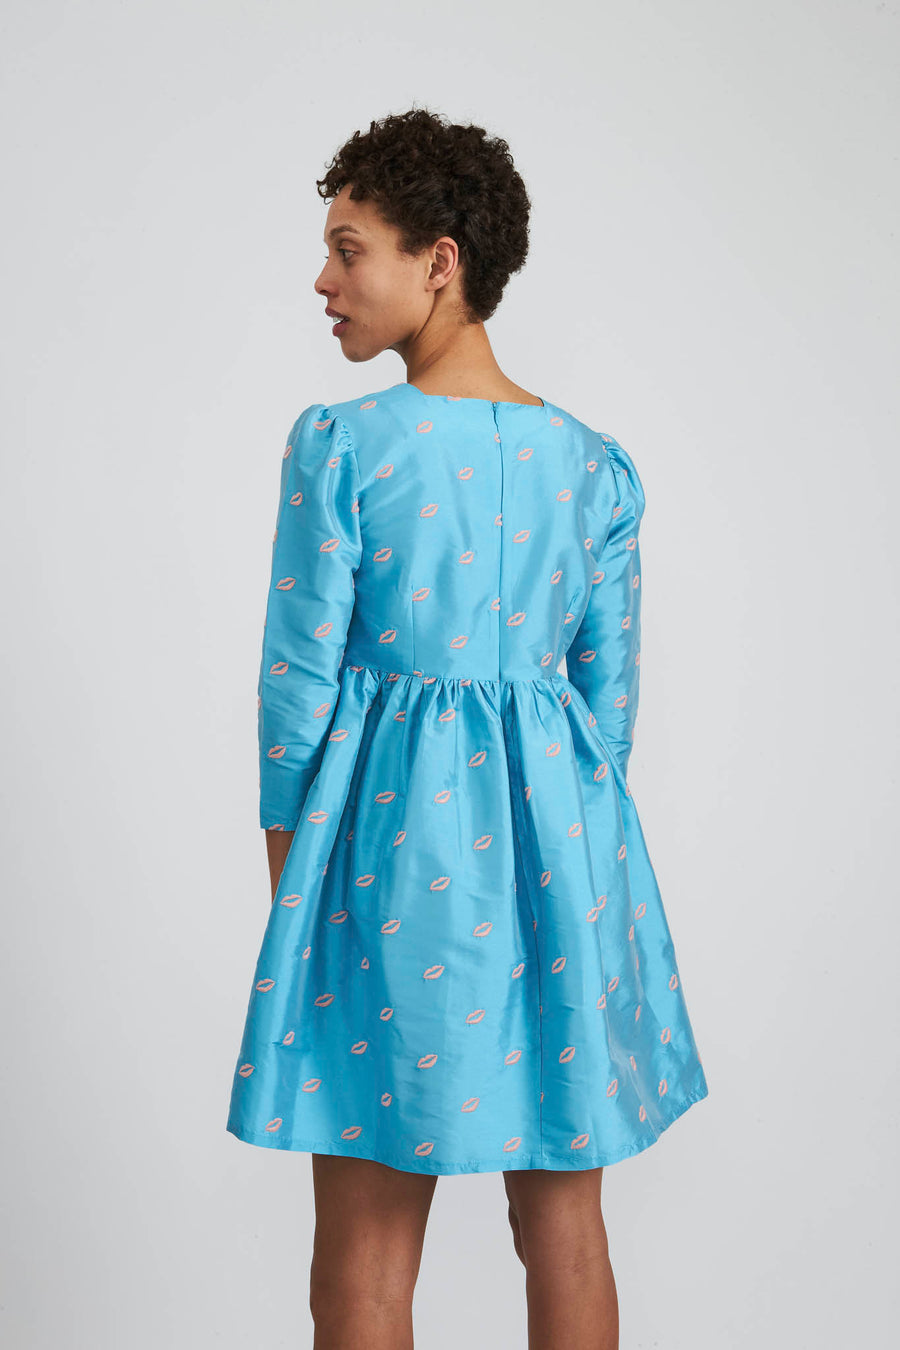 BATSHEVA - Square Neck Mini Prairie Dress in Turquoise Taffeta with Embroidered Lips